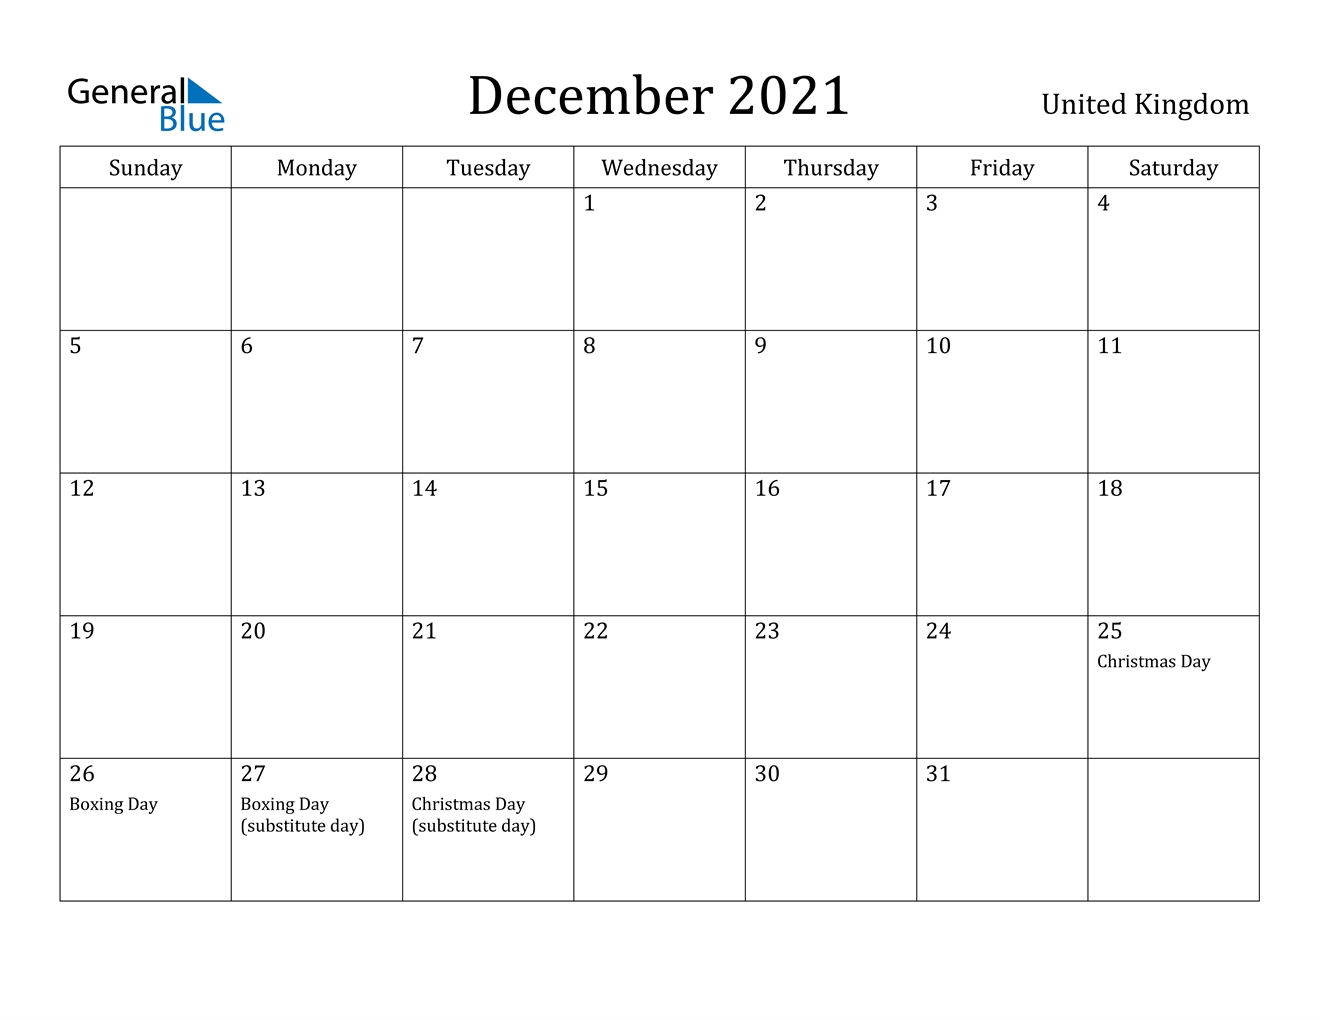 December 2021 Calendar - United Kingdom